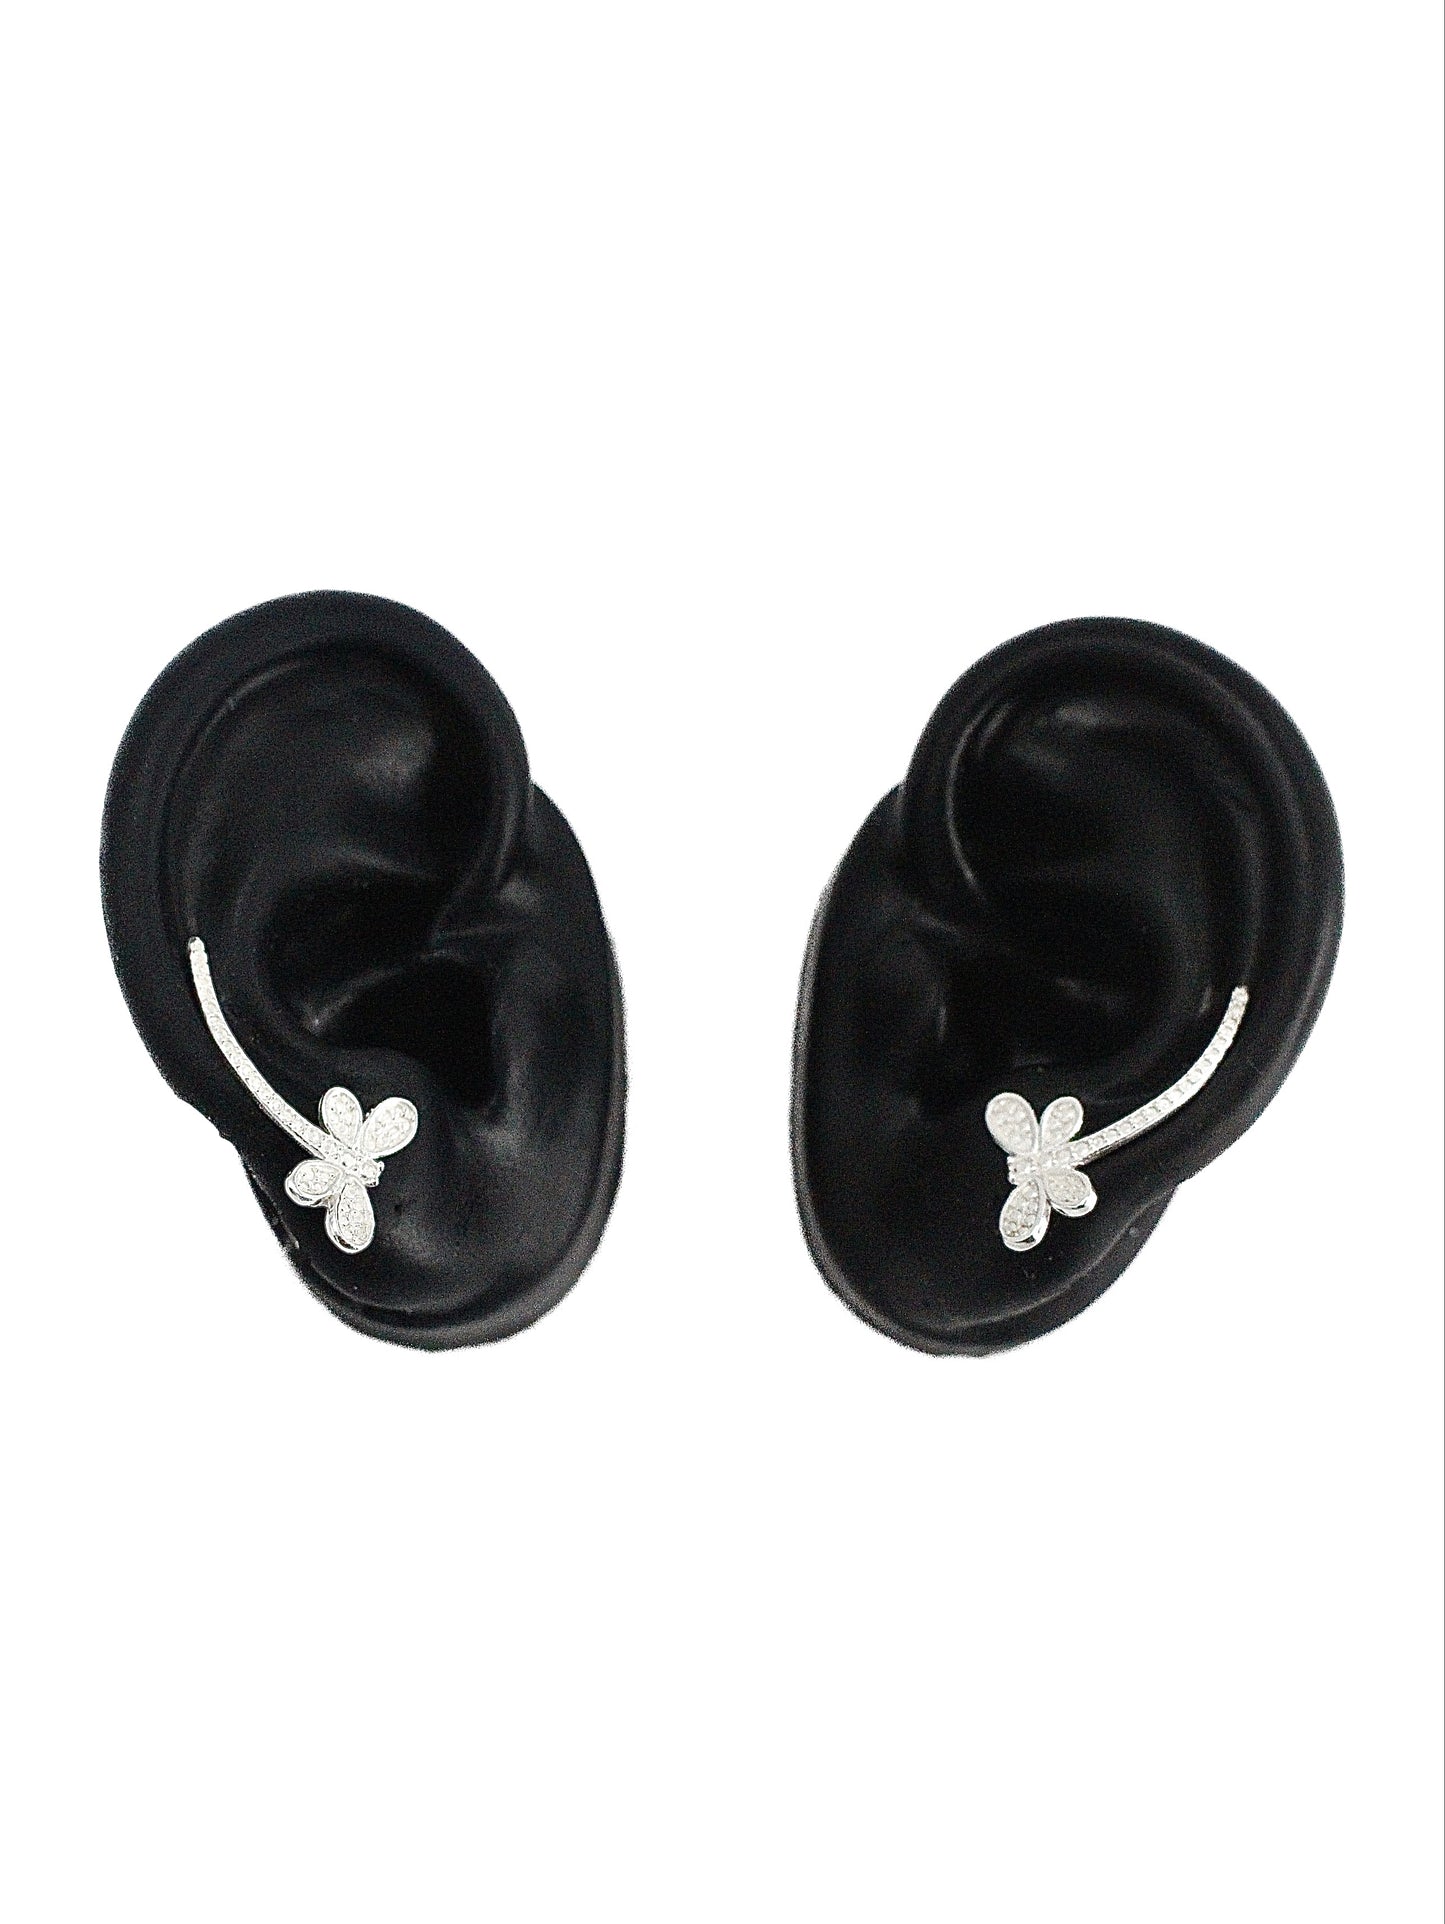 Climber (DRAGONFLY) Earrings